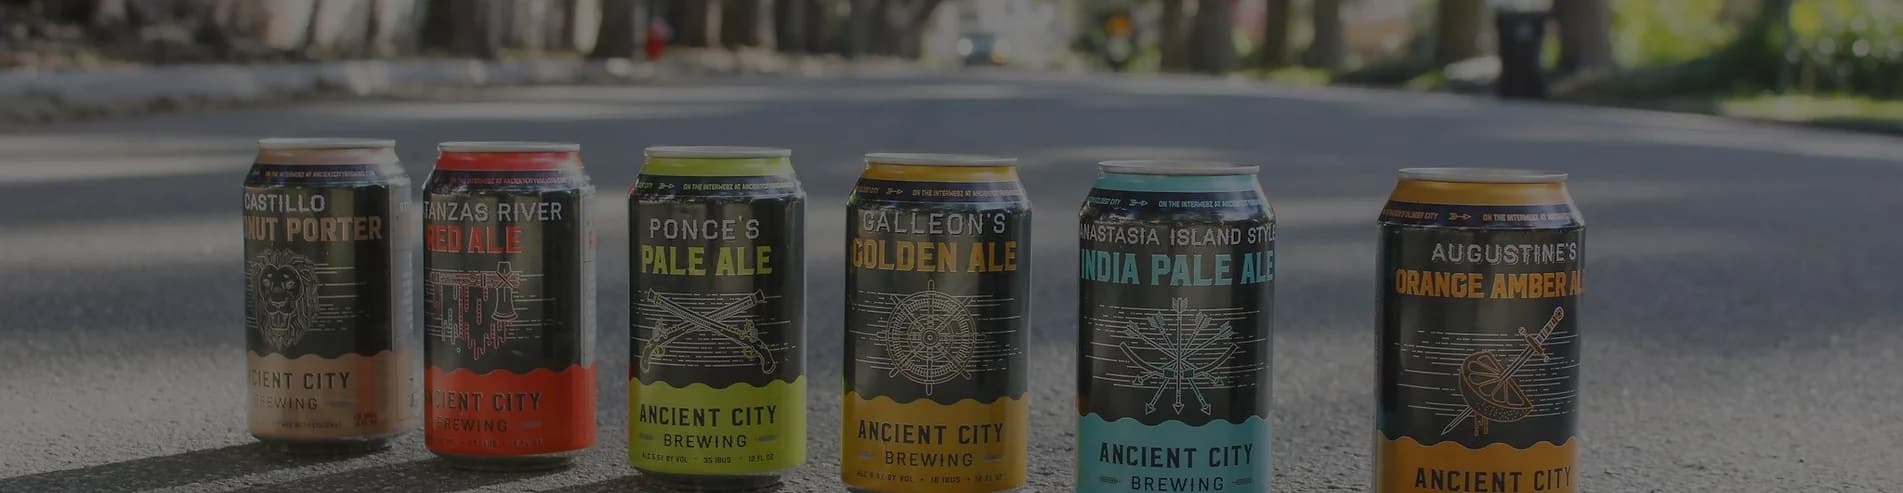 Ancient City Brewing Company